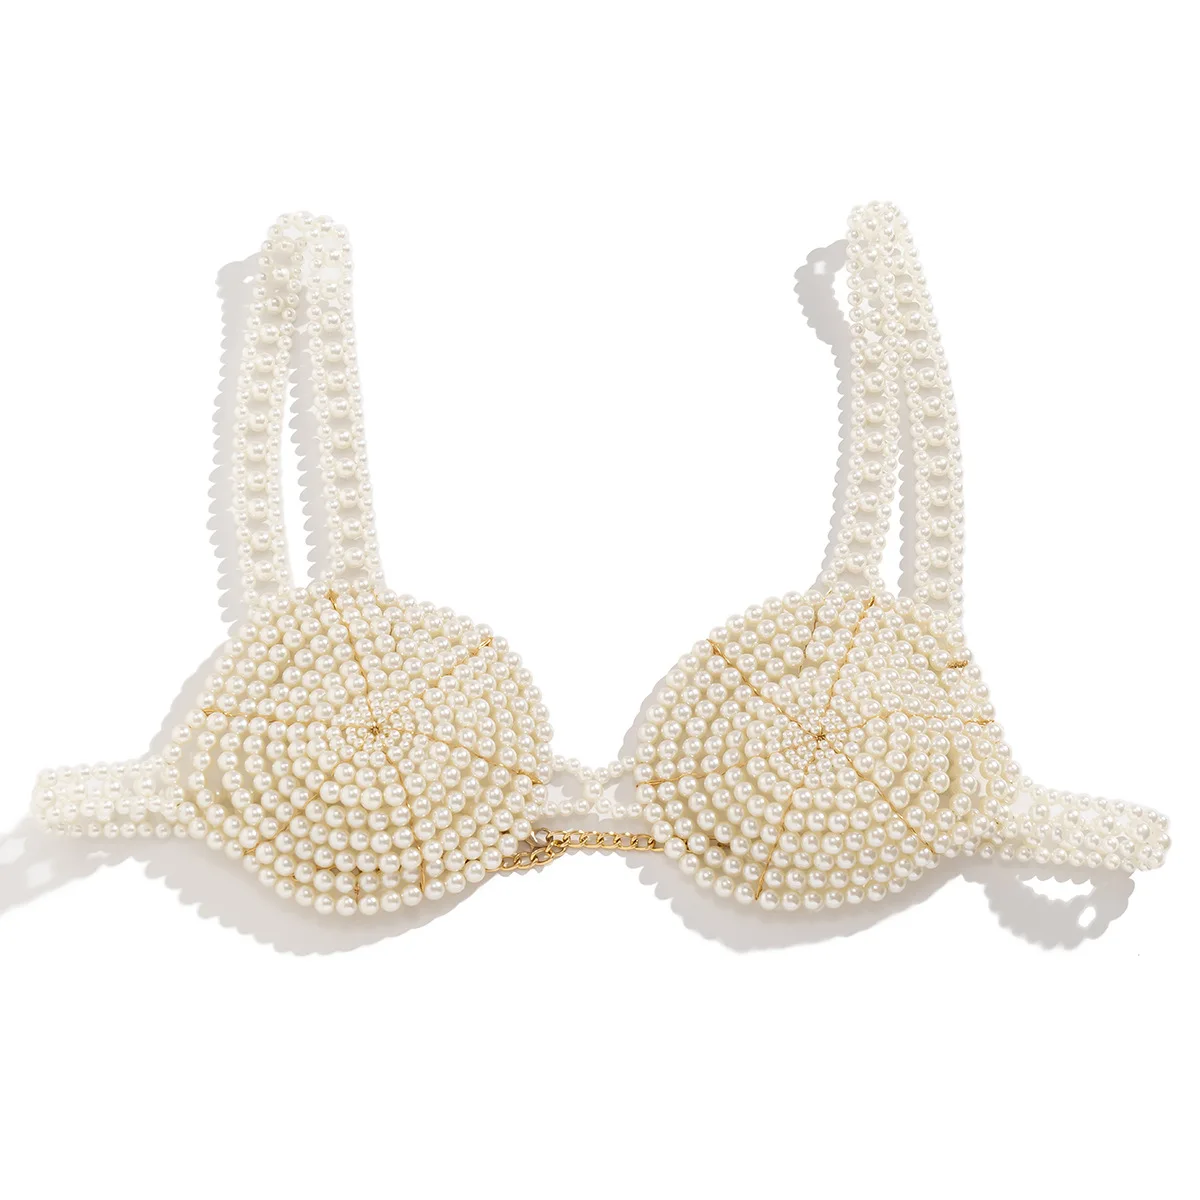 Female Nightclub Sexy Rhinestone Bra Lingerie Jewelry Accessories Luxury Shiny Full Diamond Underwear Sets